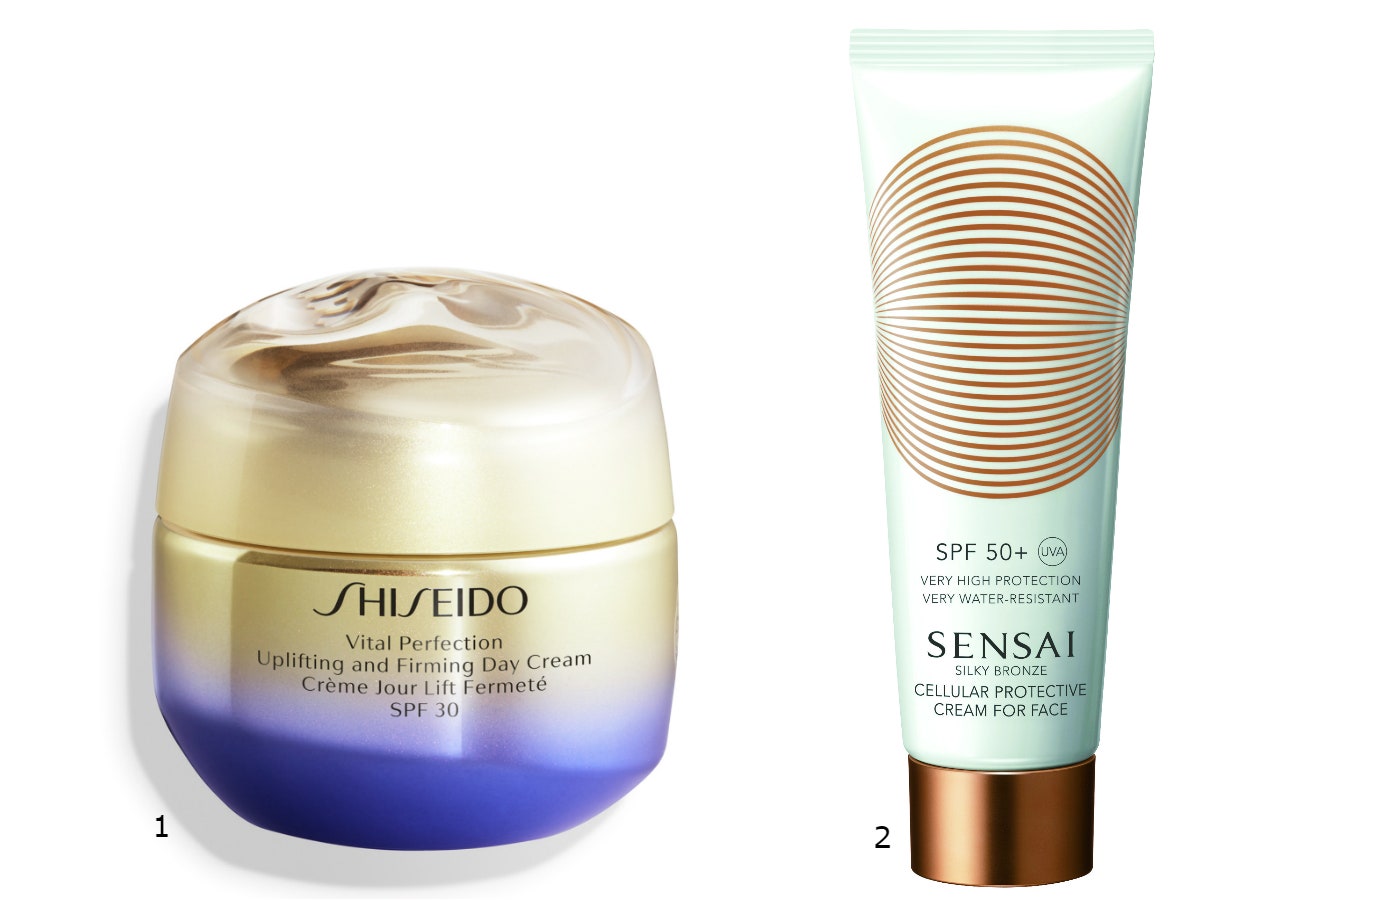 Shiseido Vital Perfection Uplifting And Firming Day Cream SPF 30 2. Sensai. Silky Bronze Cellular Protective Cream For...